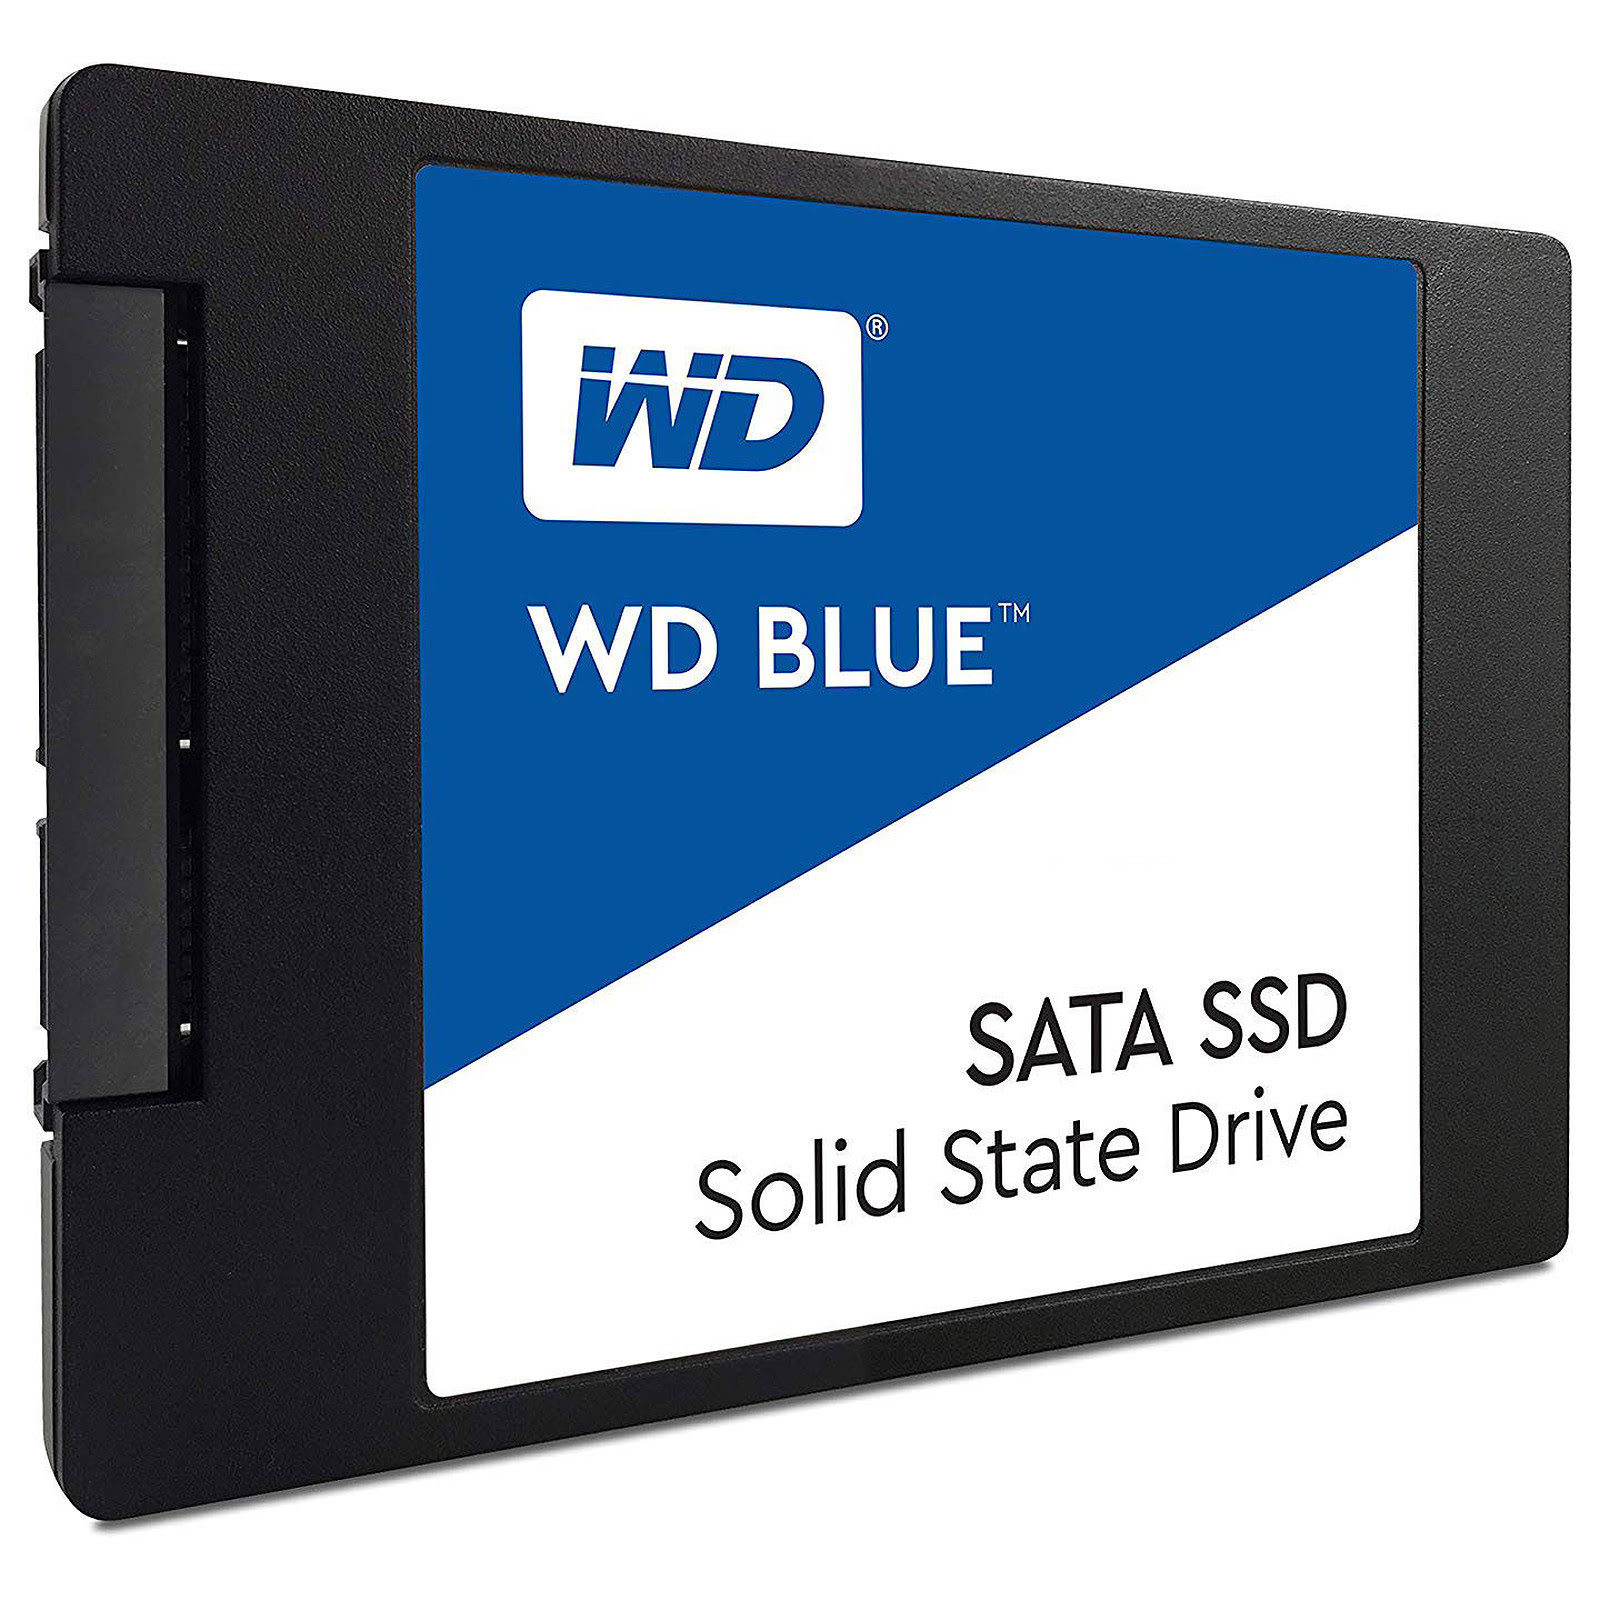 PNY 2To SATA III SSD7CS900-2TB-RB SATA III - Disque SSD PNY